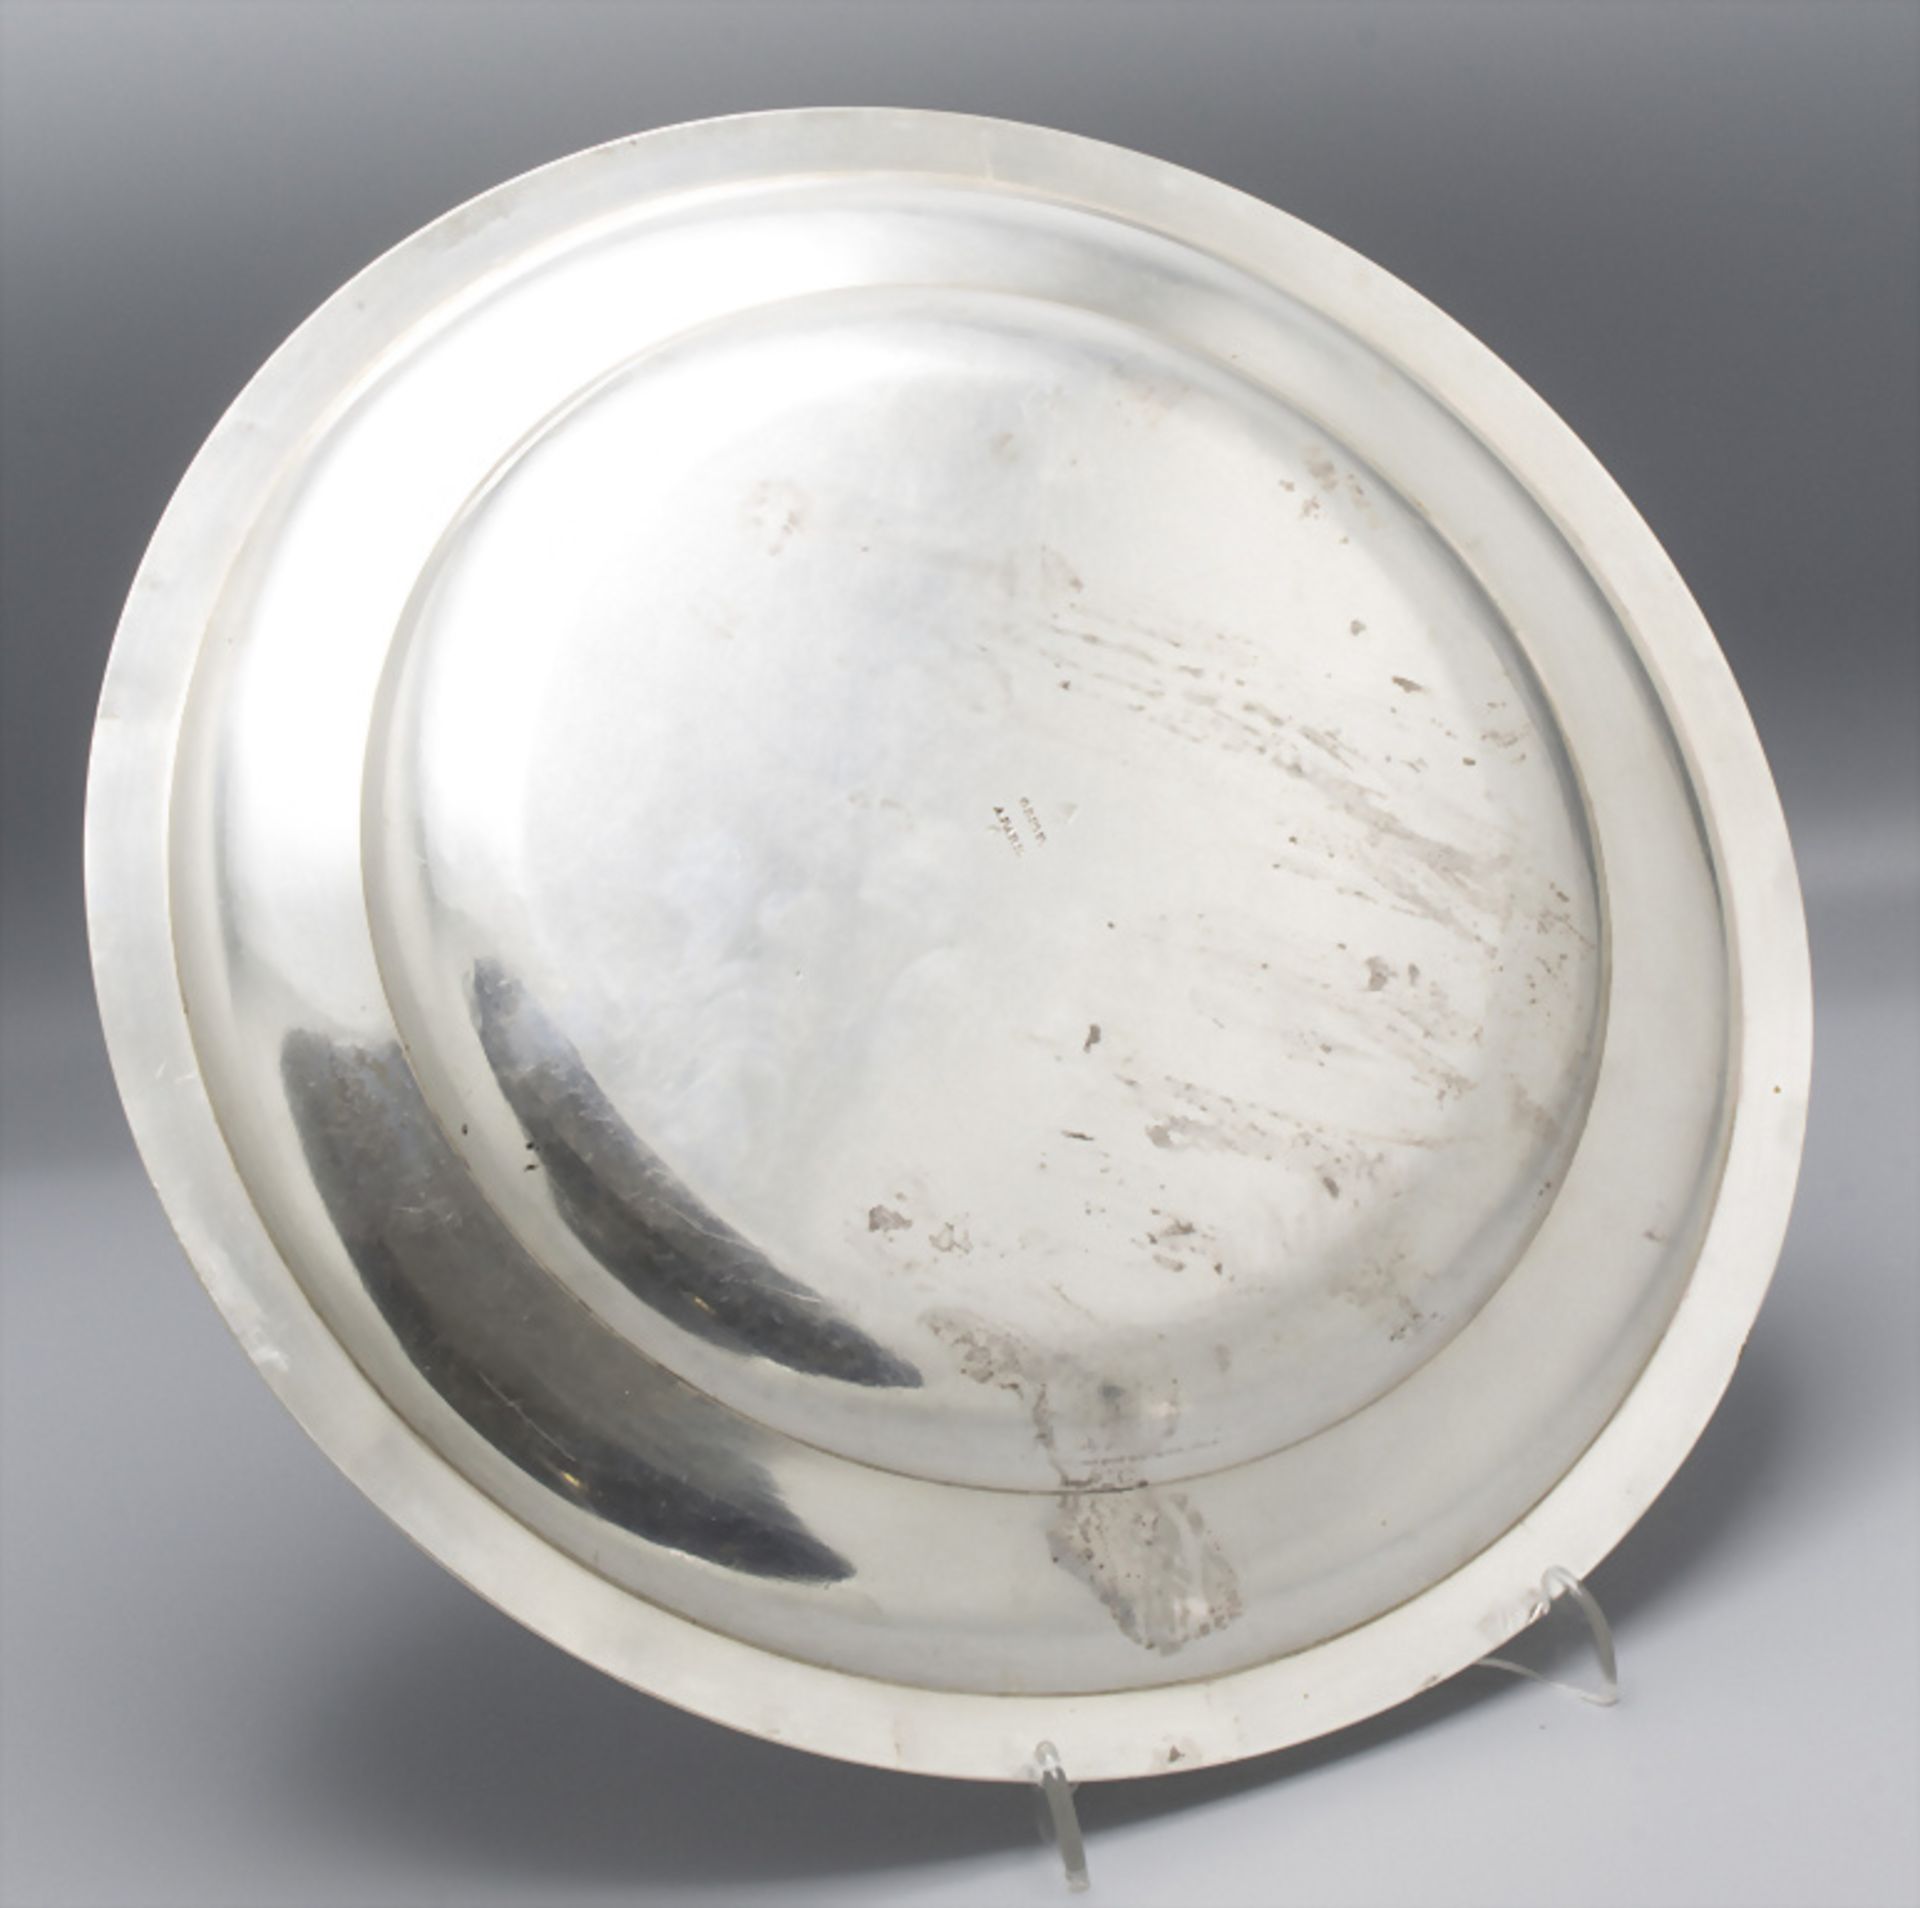 12 Silberteller / 12 assiettes en argent massif / A set of 12 silver plates, Odiot, Paris, um 1870 - Image 13 of 29